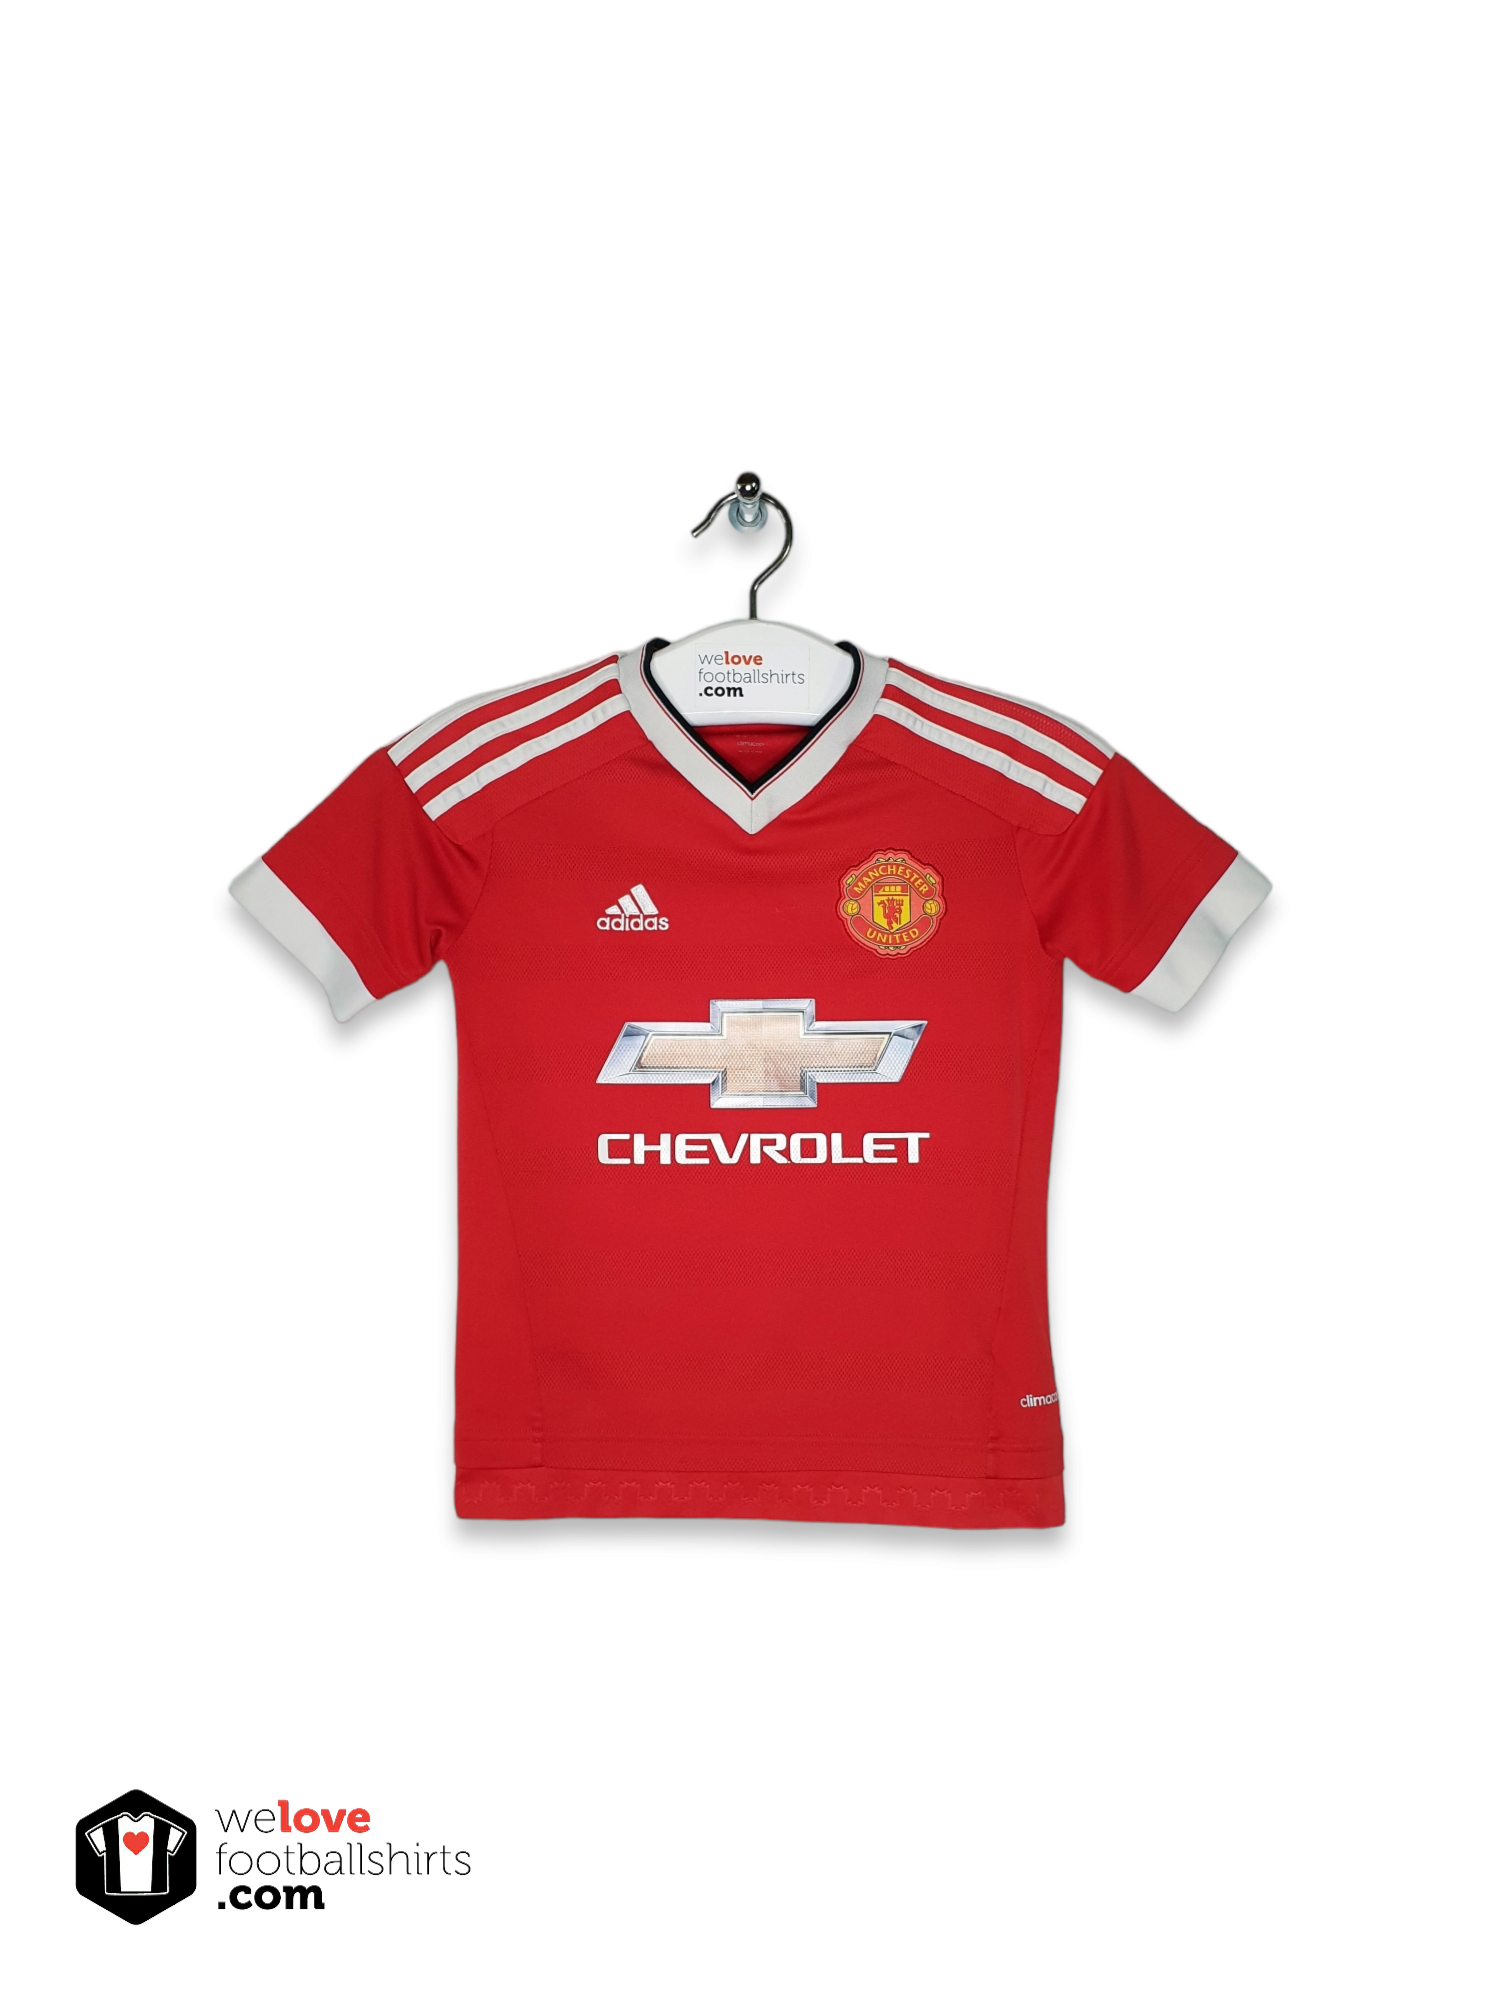 attent Smeltend Belegering Adidas voetbalshirt Manchester United 2015/16 - Welovefootballshirts.com